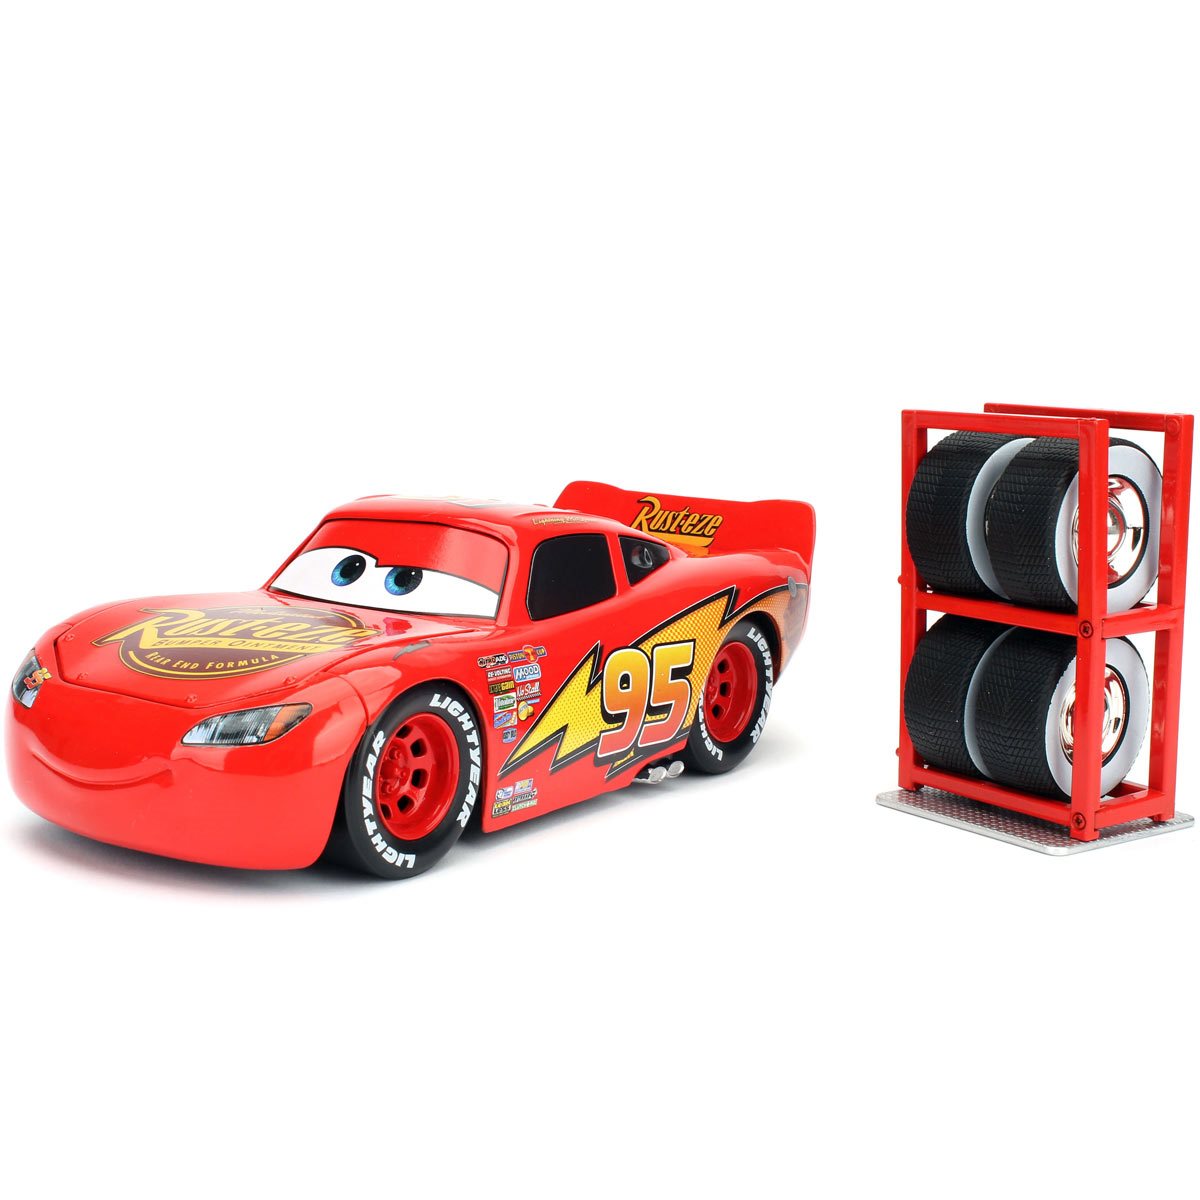 Mattel Disney/Pixar Cars 3 Lightning McQueen Die-Cast Vehicle